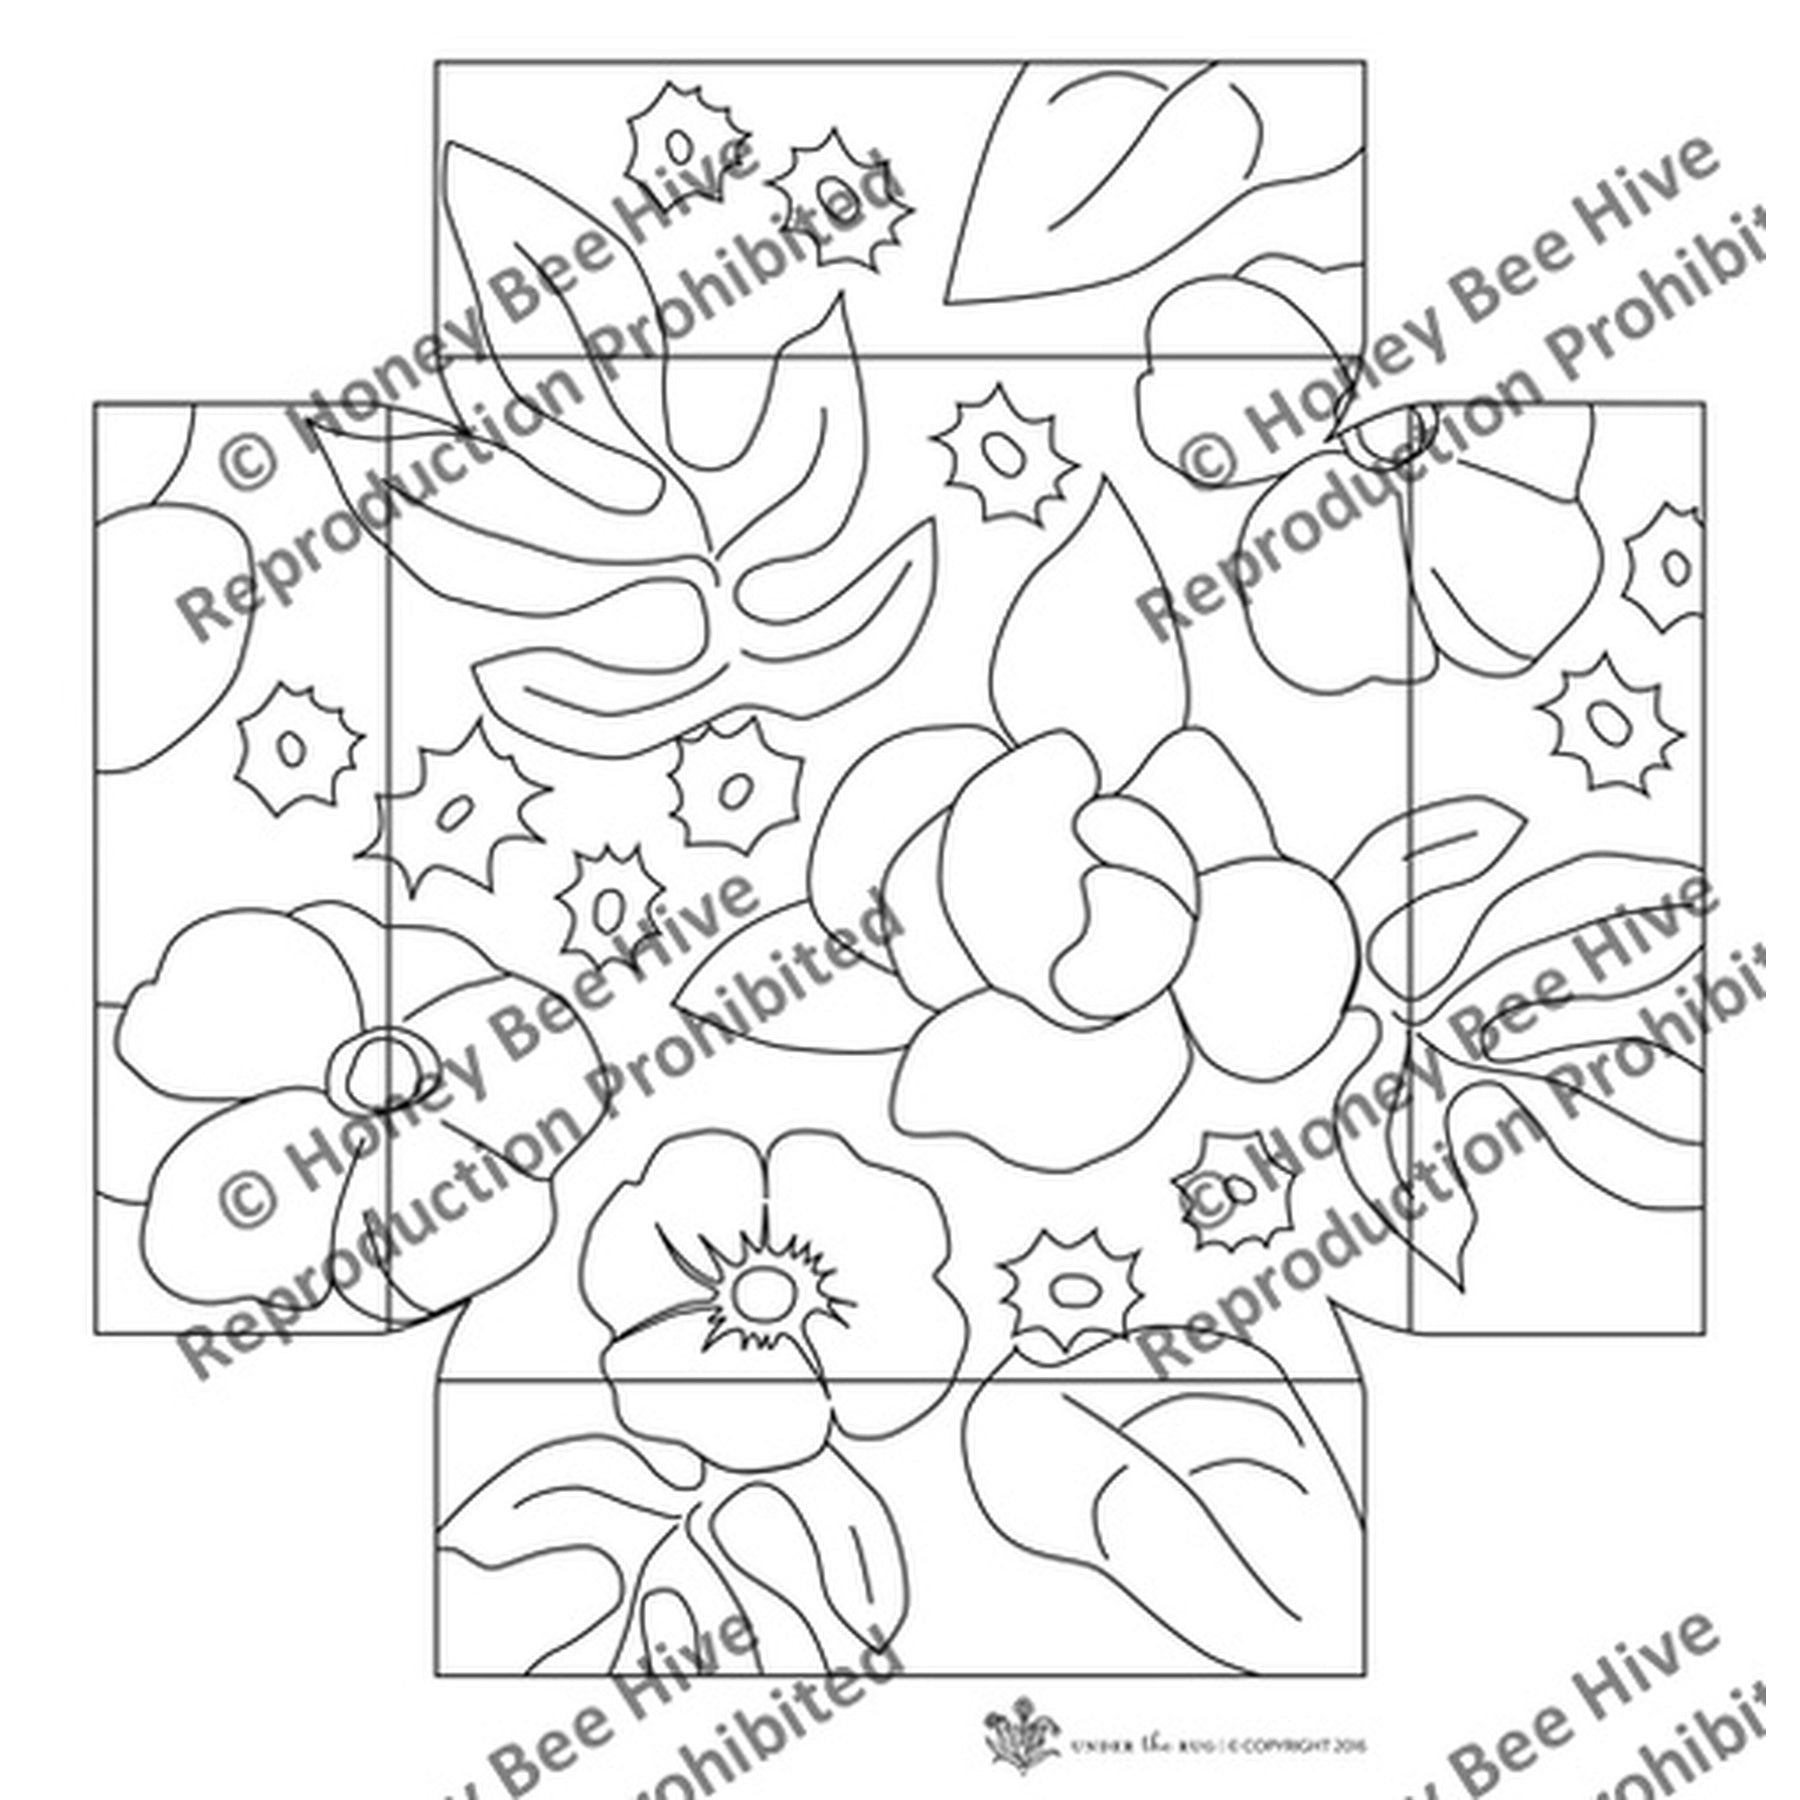 Proddy Floral - Square Footstool Pattern, rug hooking pattern